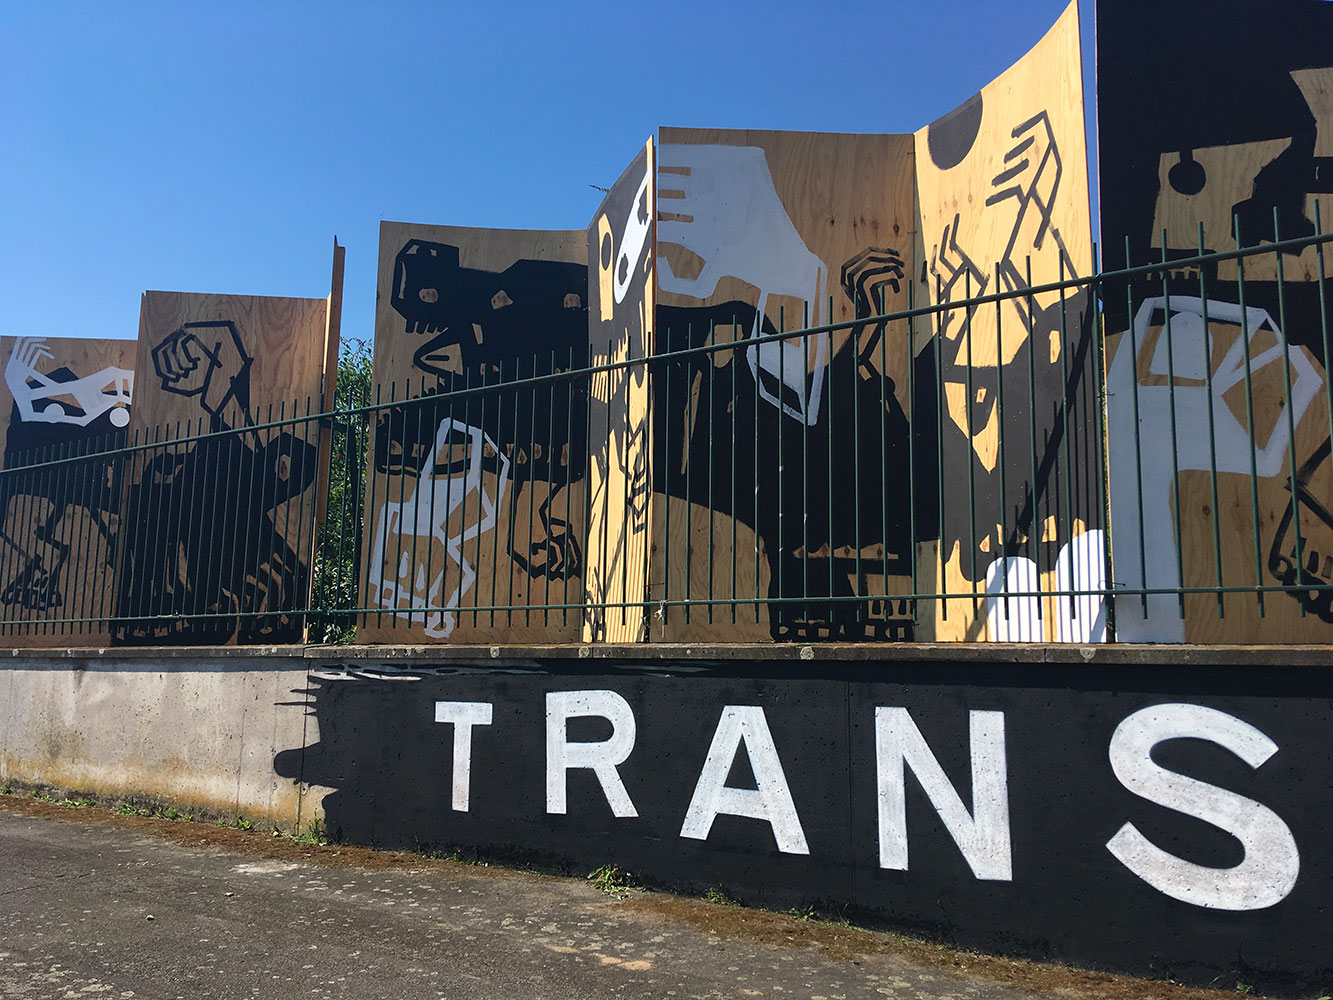 Transfert Nantes Exposition Transfert
Toma-L
2018 ©